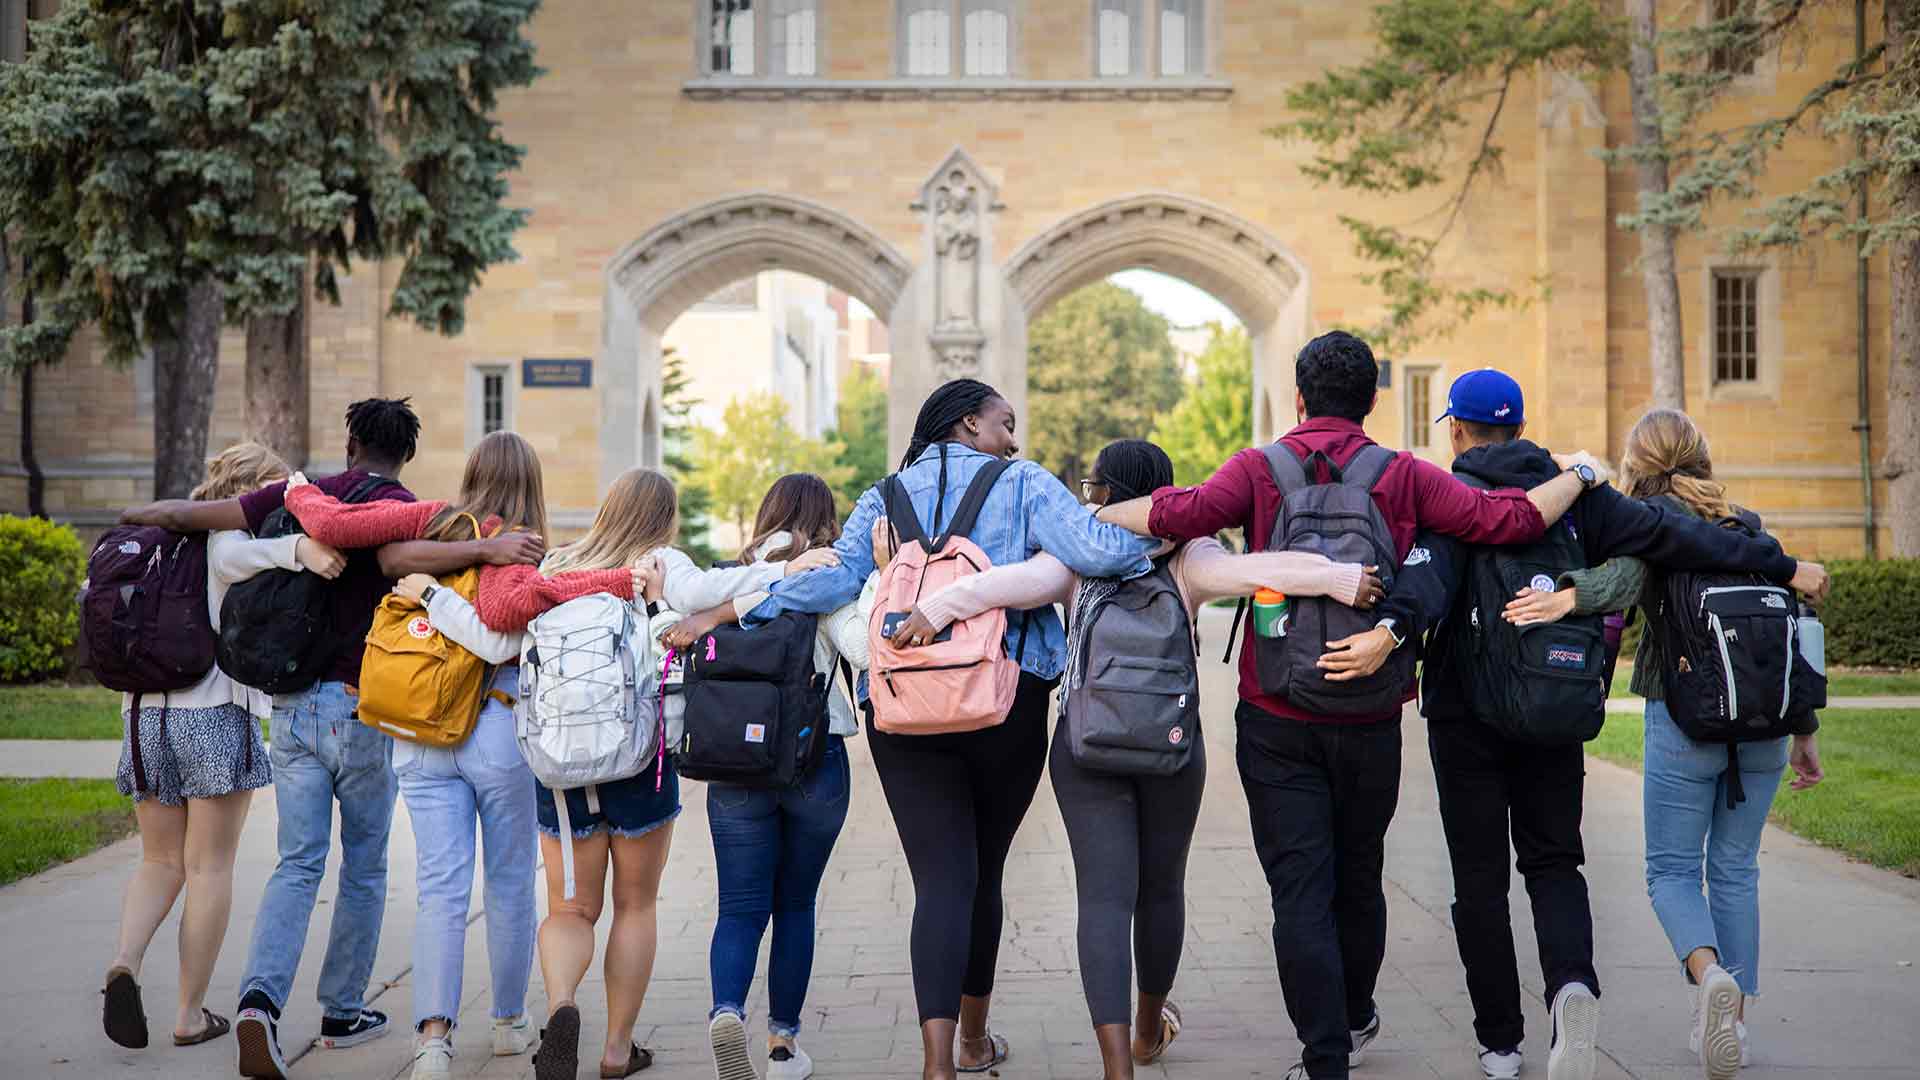 International students walking near arches.